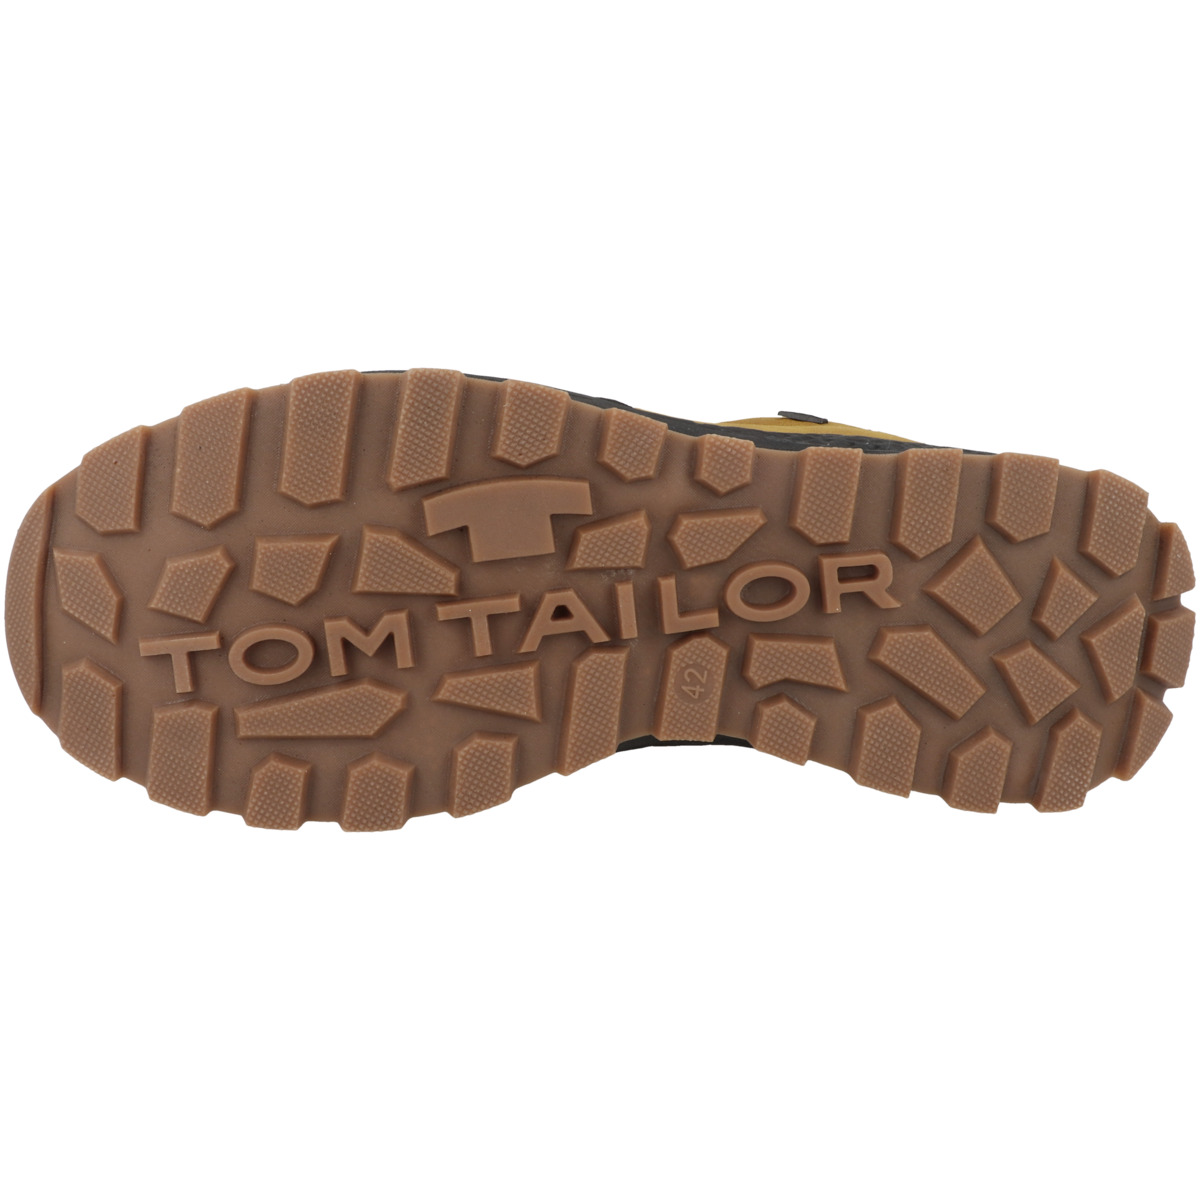 Tom Tailor 4280212 Boots braun